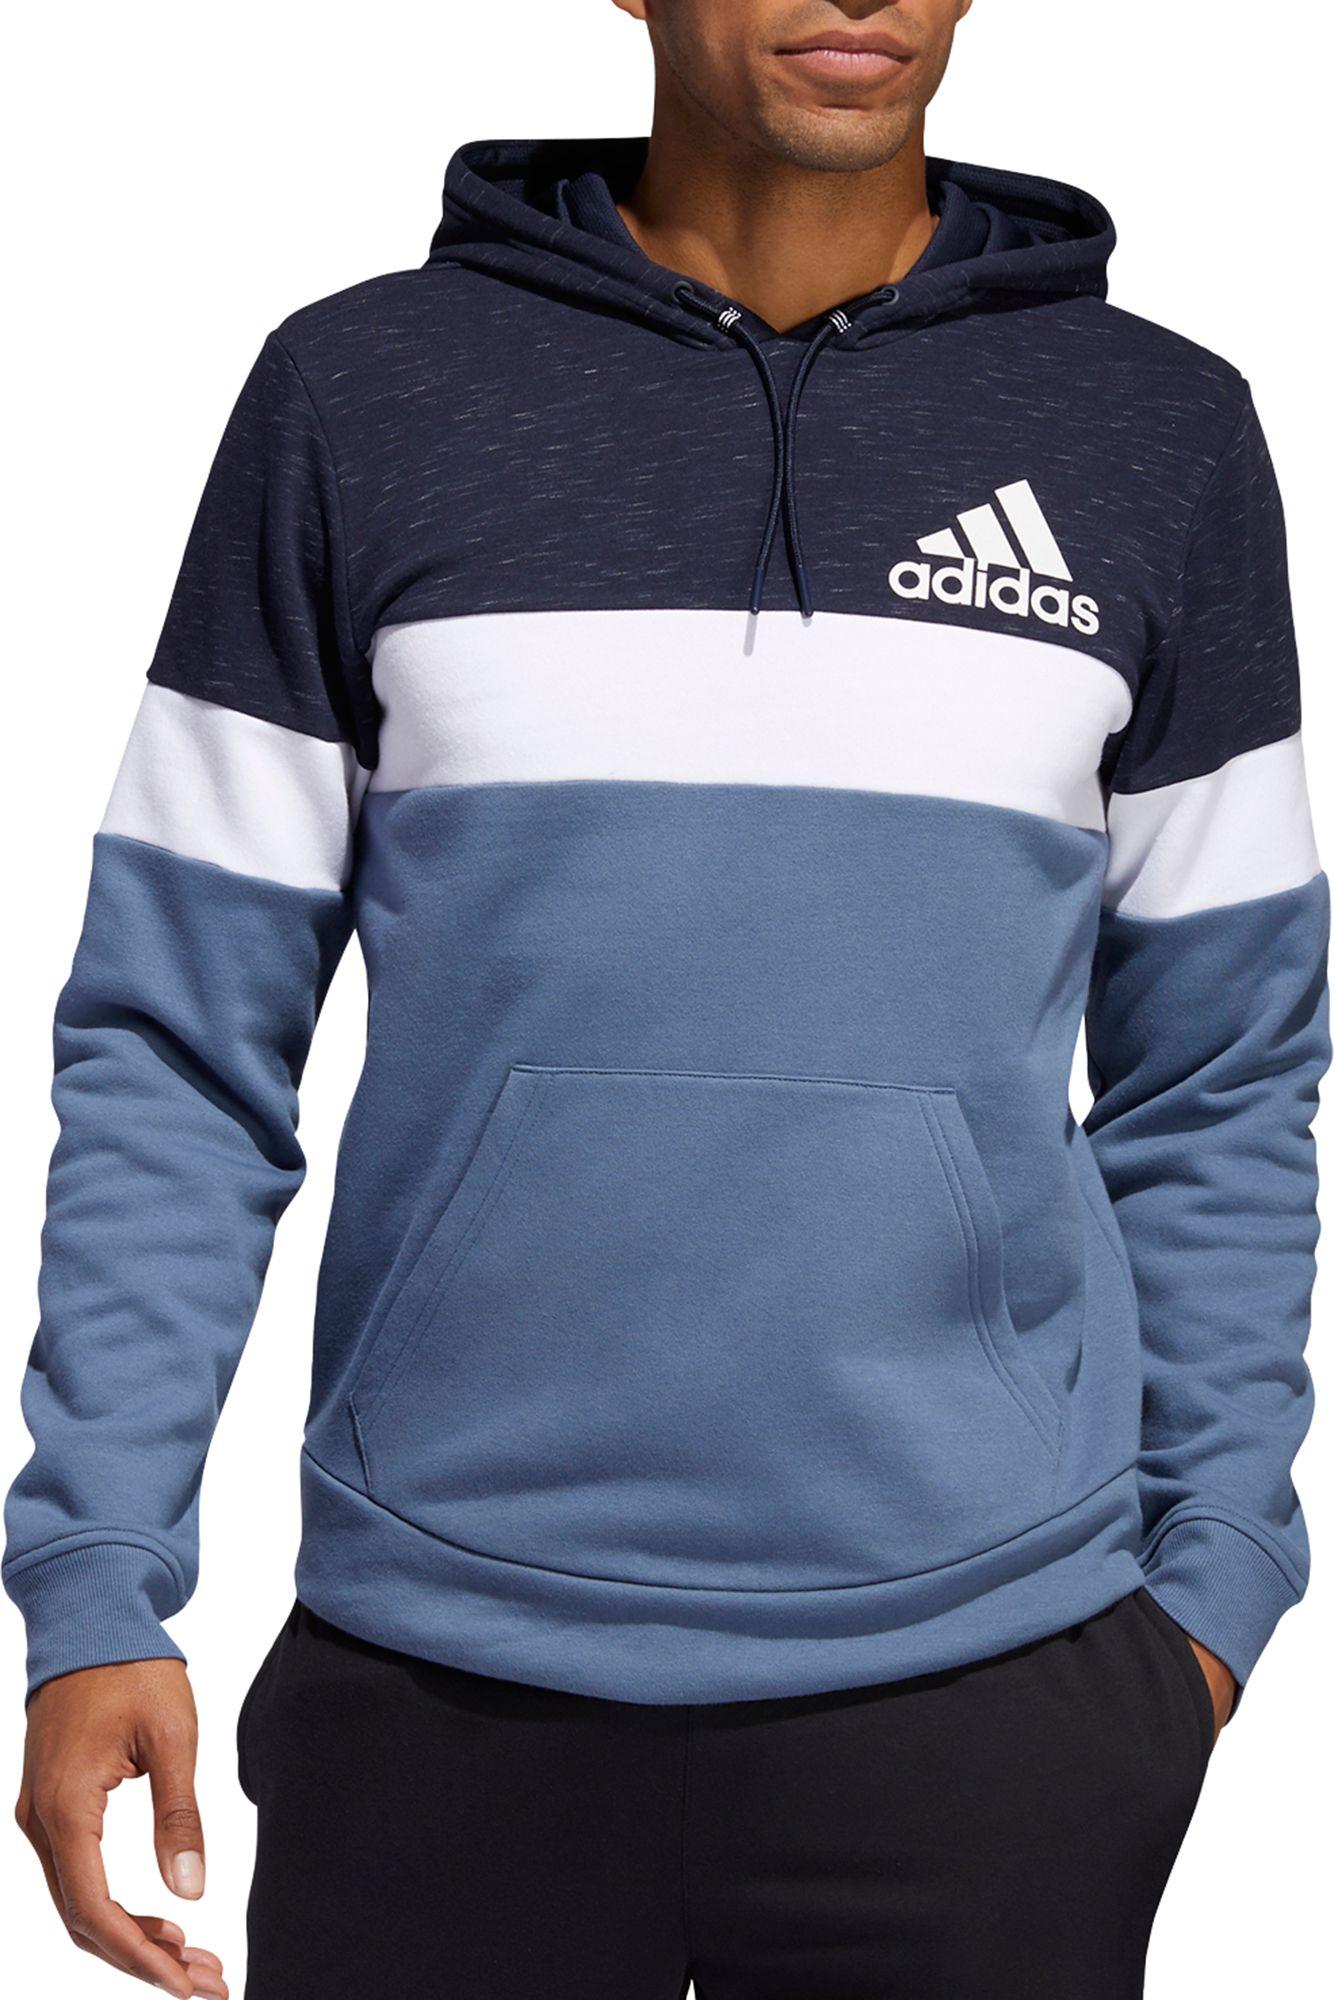 adidas men's post game retro hoodie > Purchase - 58%